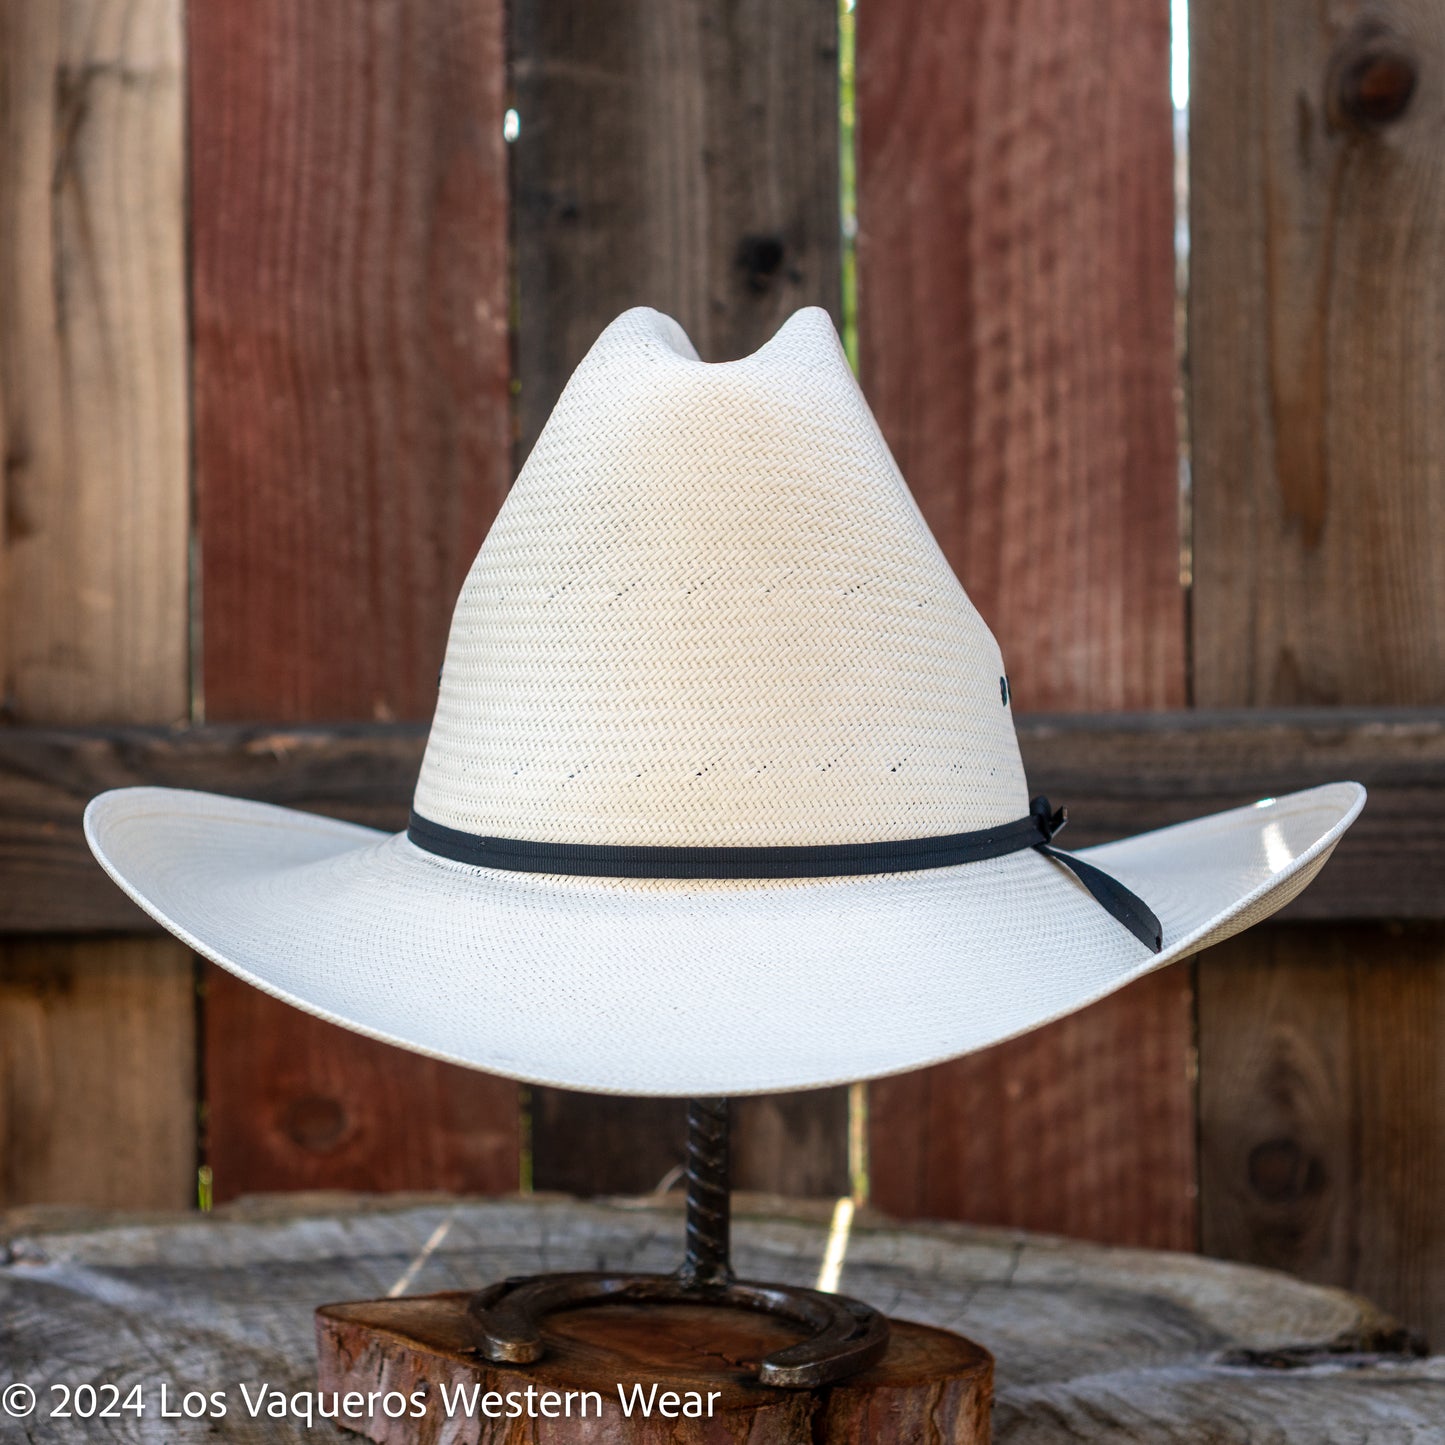 Resistol 10x Quarter Horse Cowboy Hat Straw Hat Natural